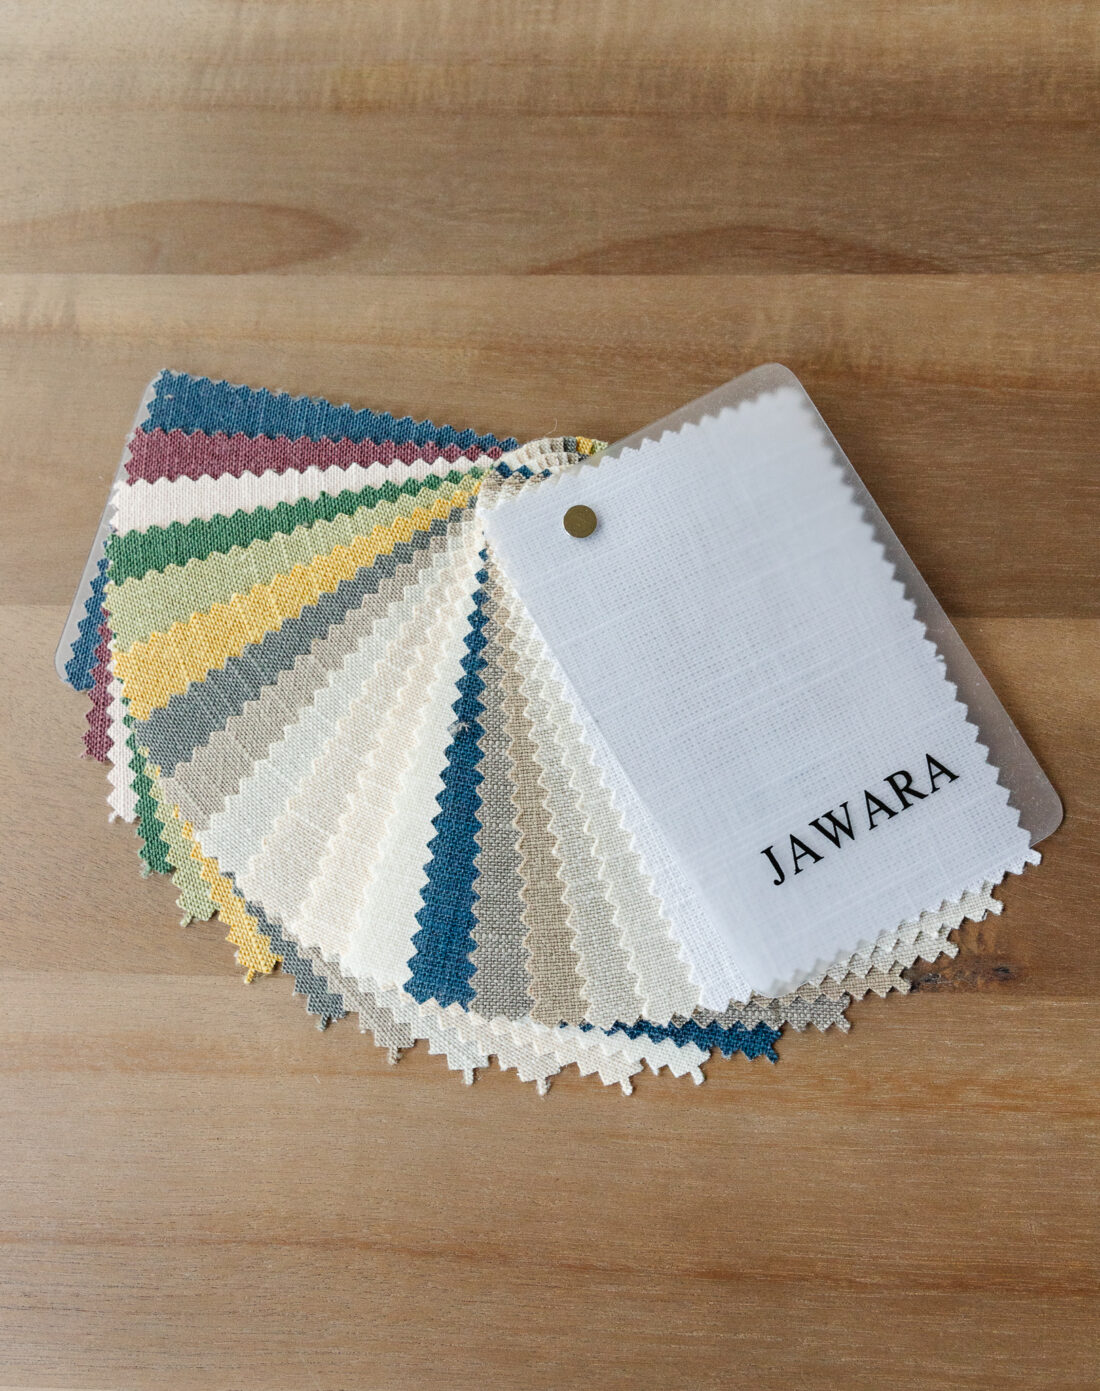 TwoPages Jawara fabric
